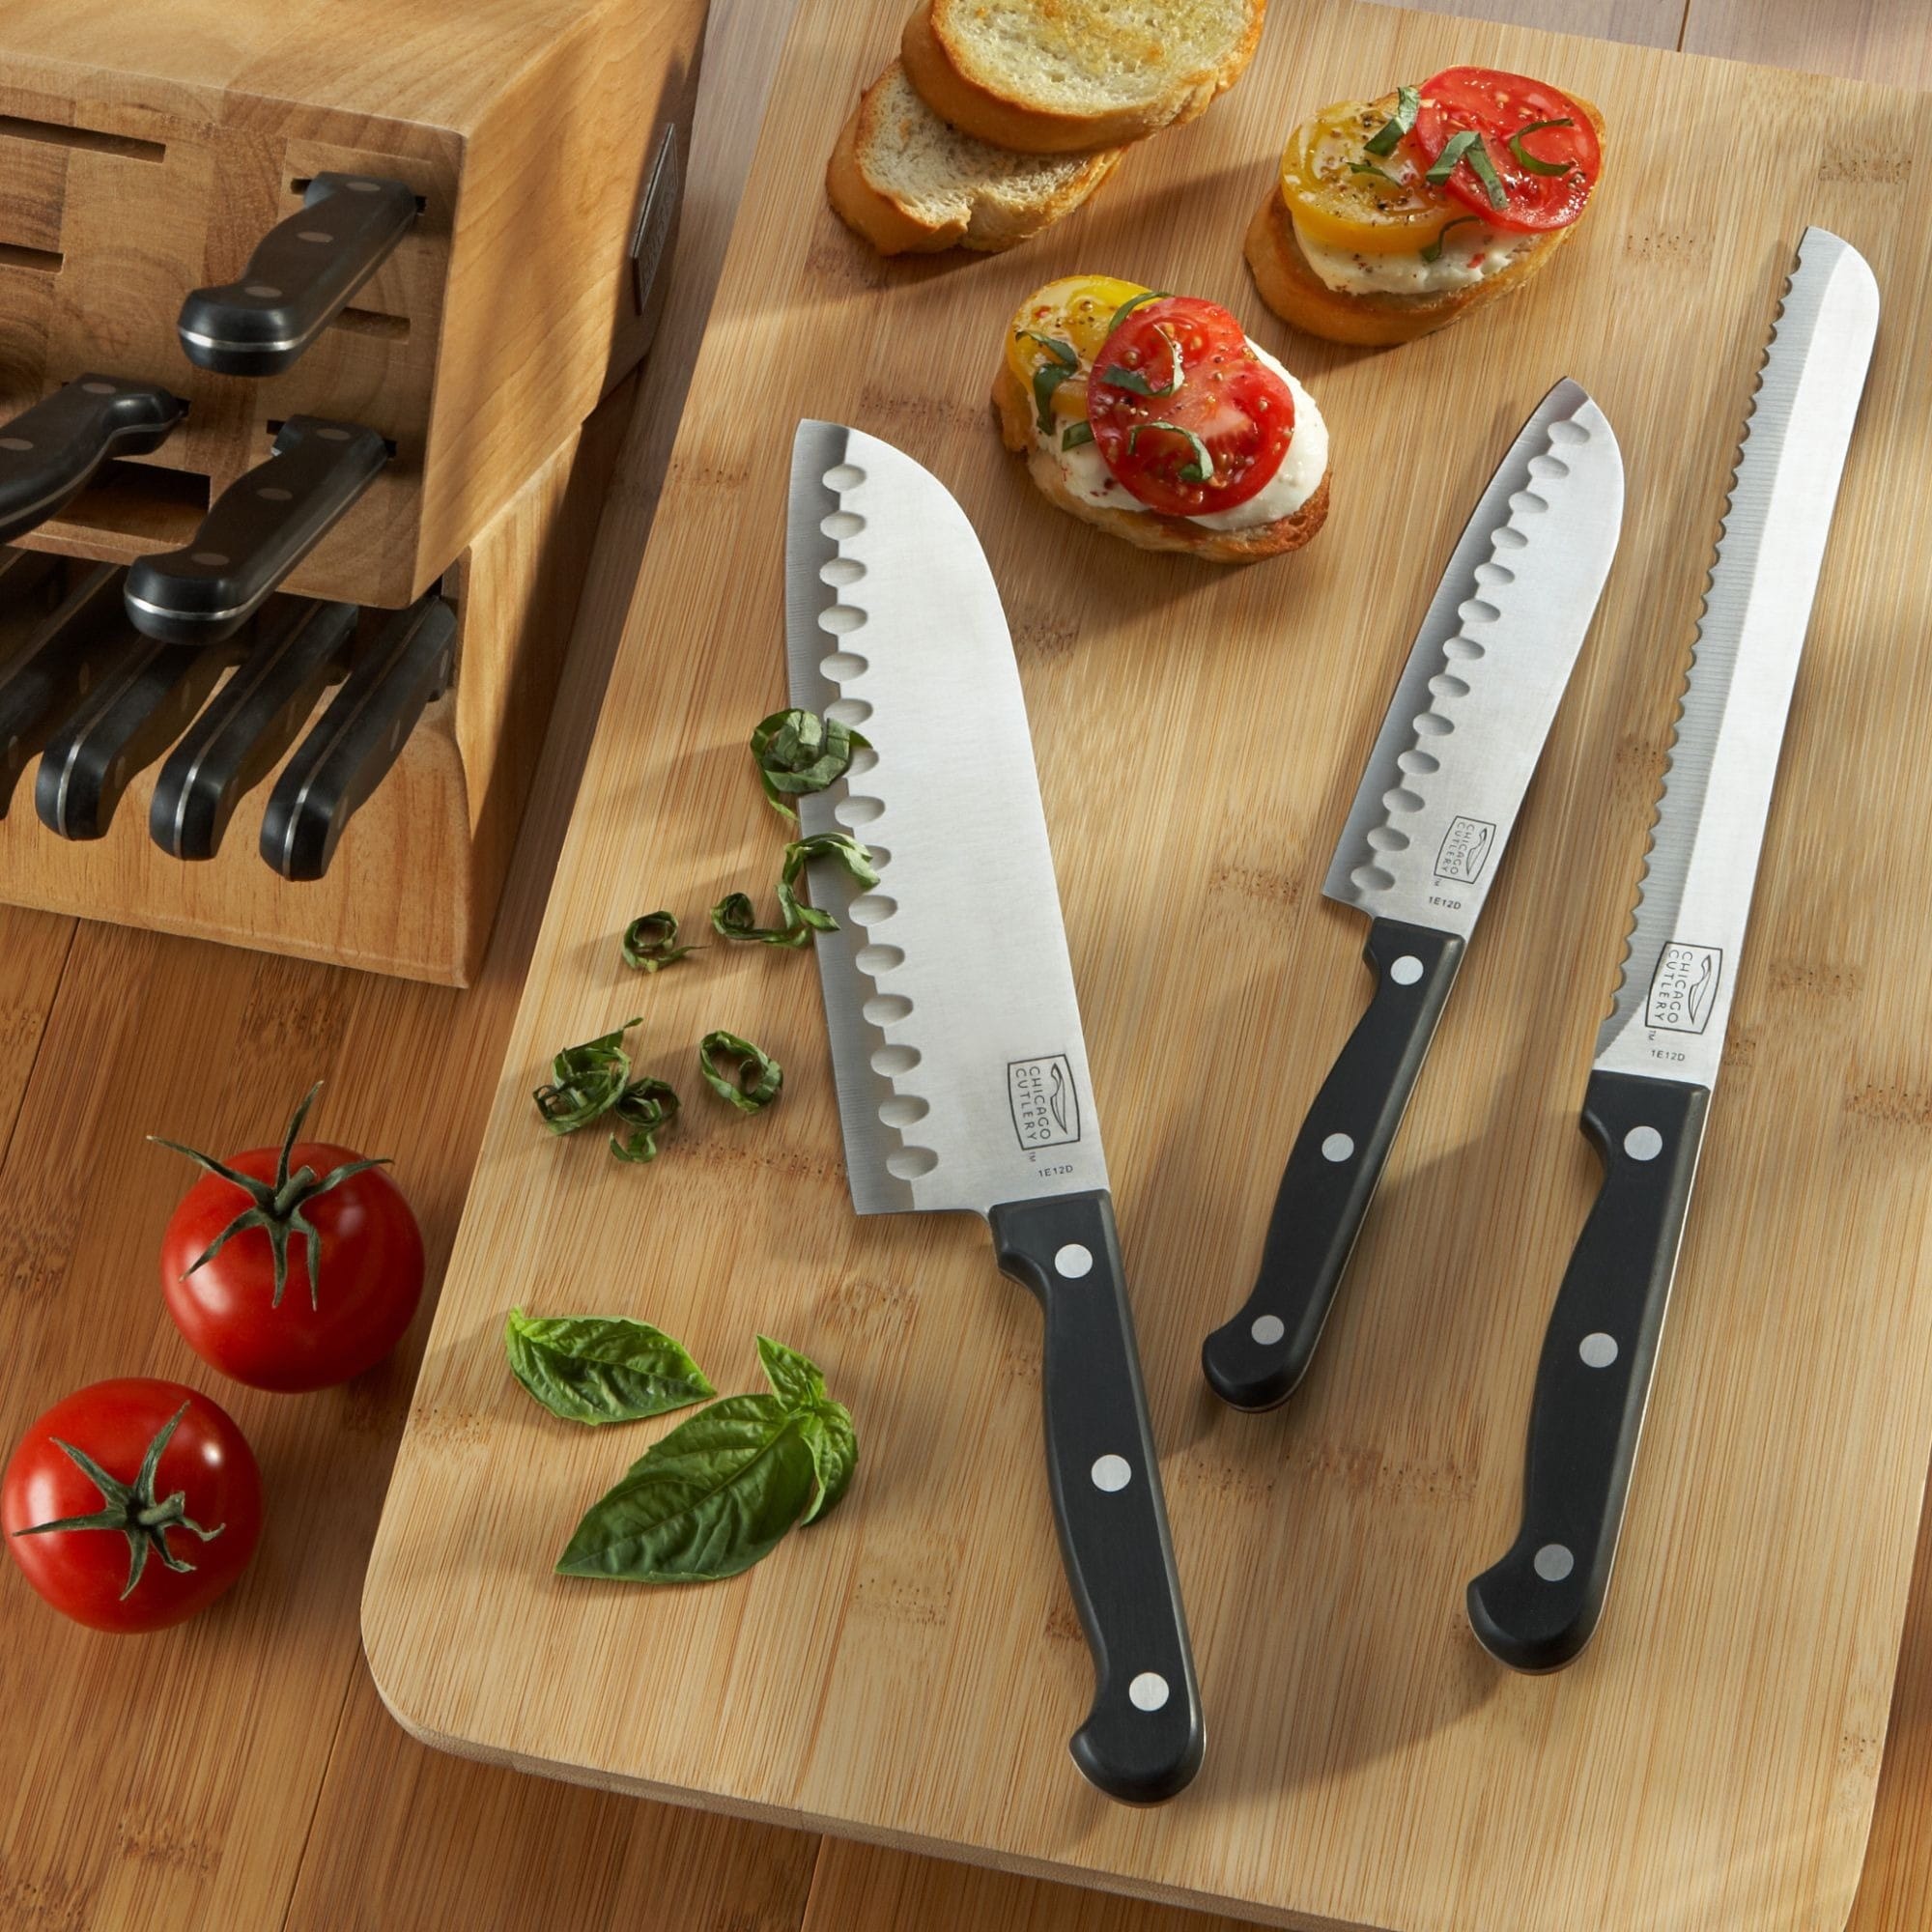 https://ak1.ostkcdn.com/images/products/3456815/Chicago-Cutlery-Essentials-15-piece-Knife-Set-ffe16ab9-d81c-45a4-a052-a79416f80a91.jpg